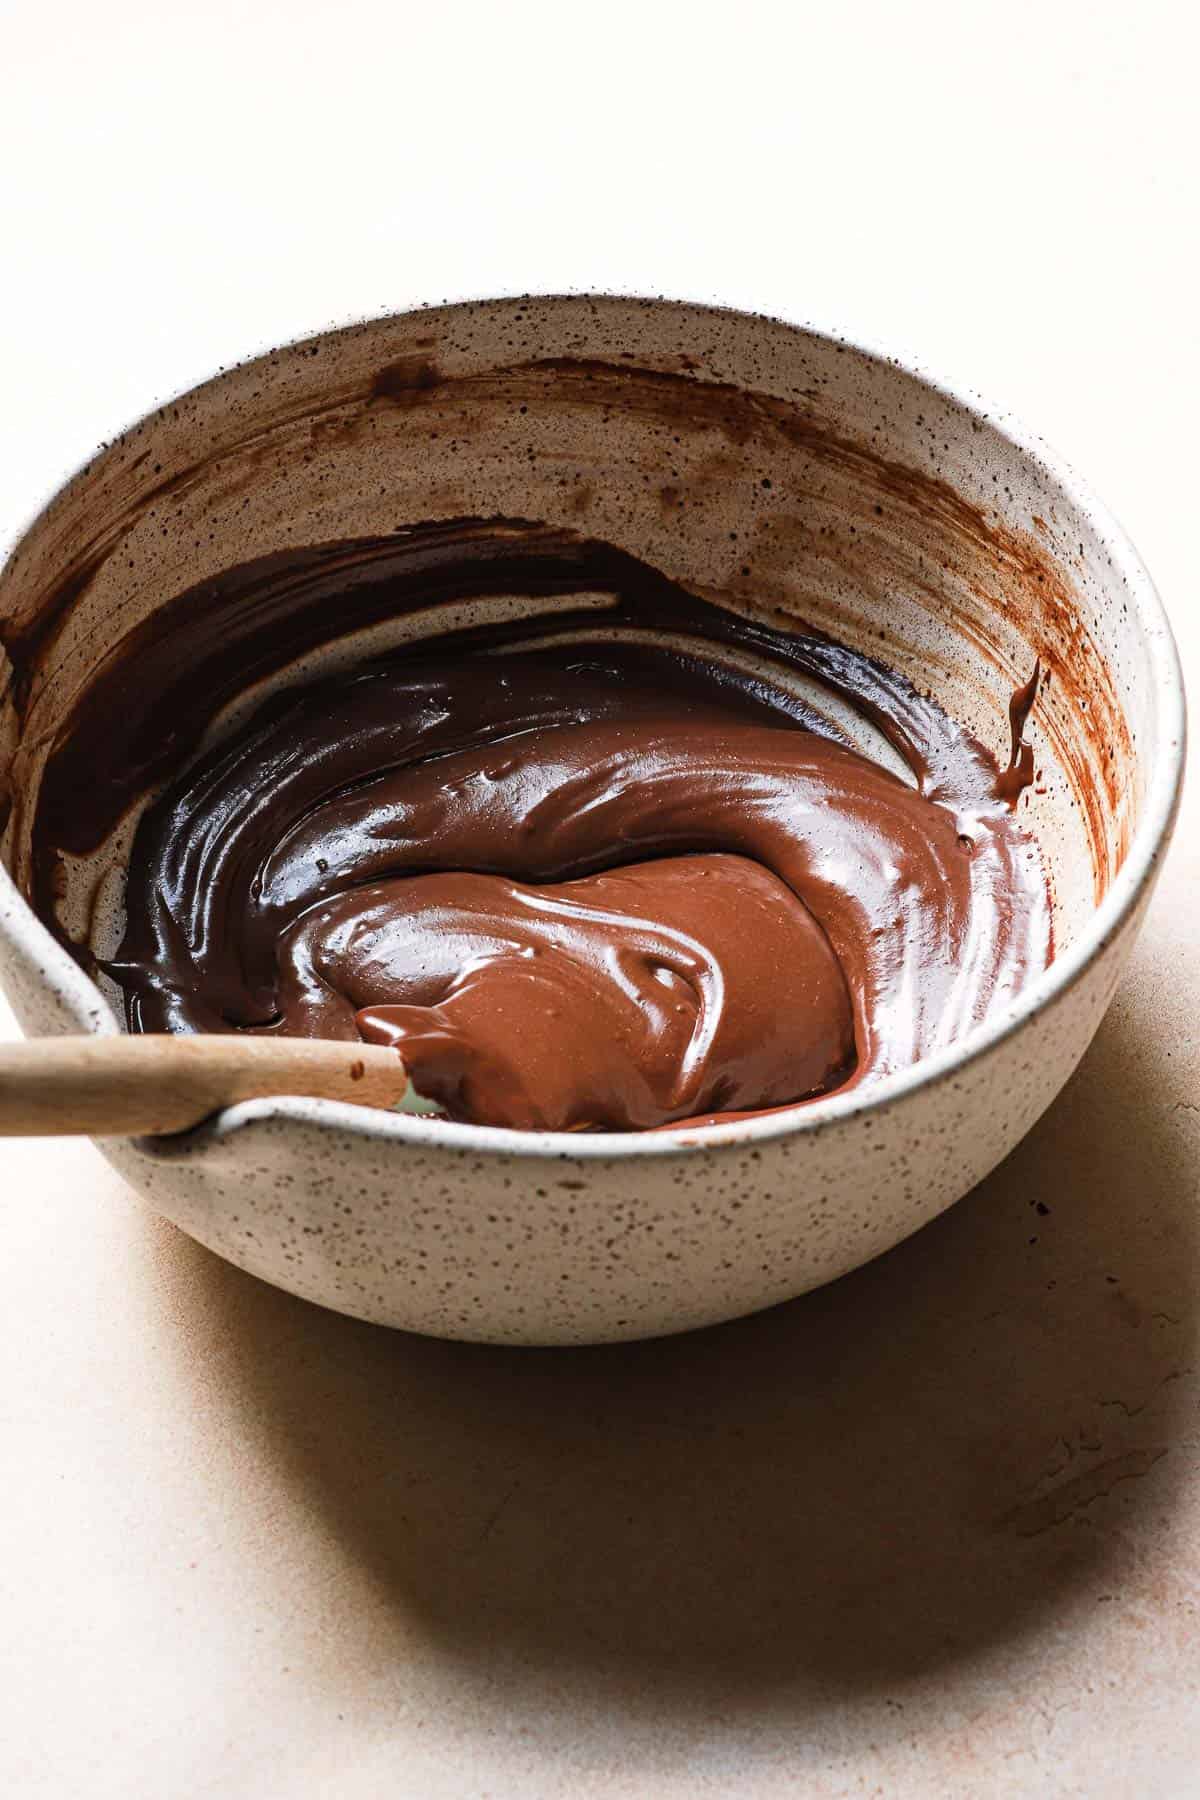 Chocolate ganache in a bowl